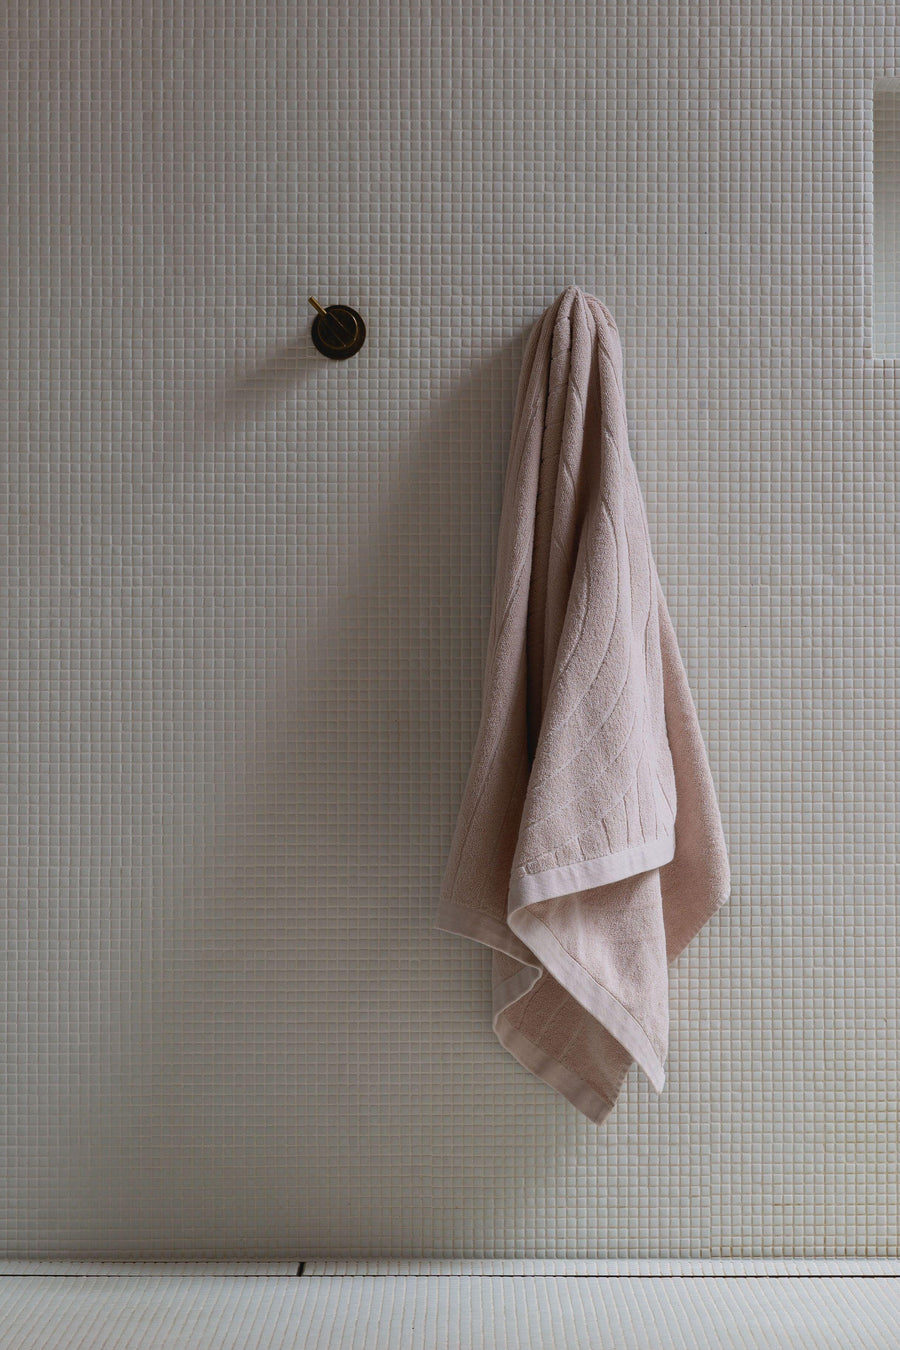 Cove Bath Towel in Clay by Baina J Chongue bathroom homeware homewares gift gifts